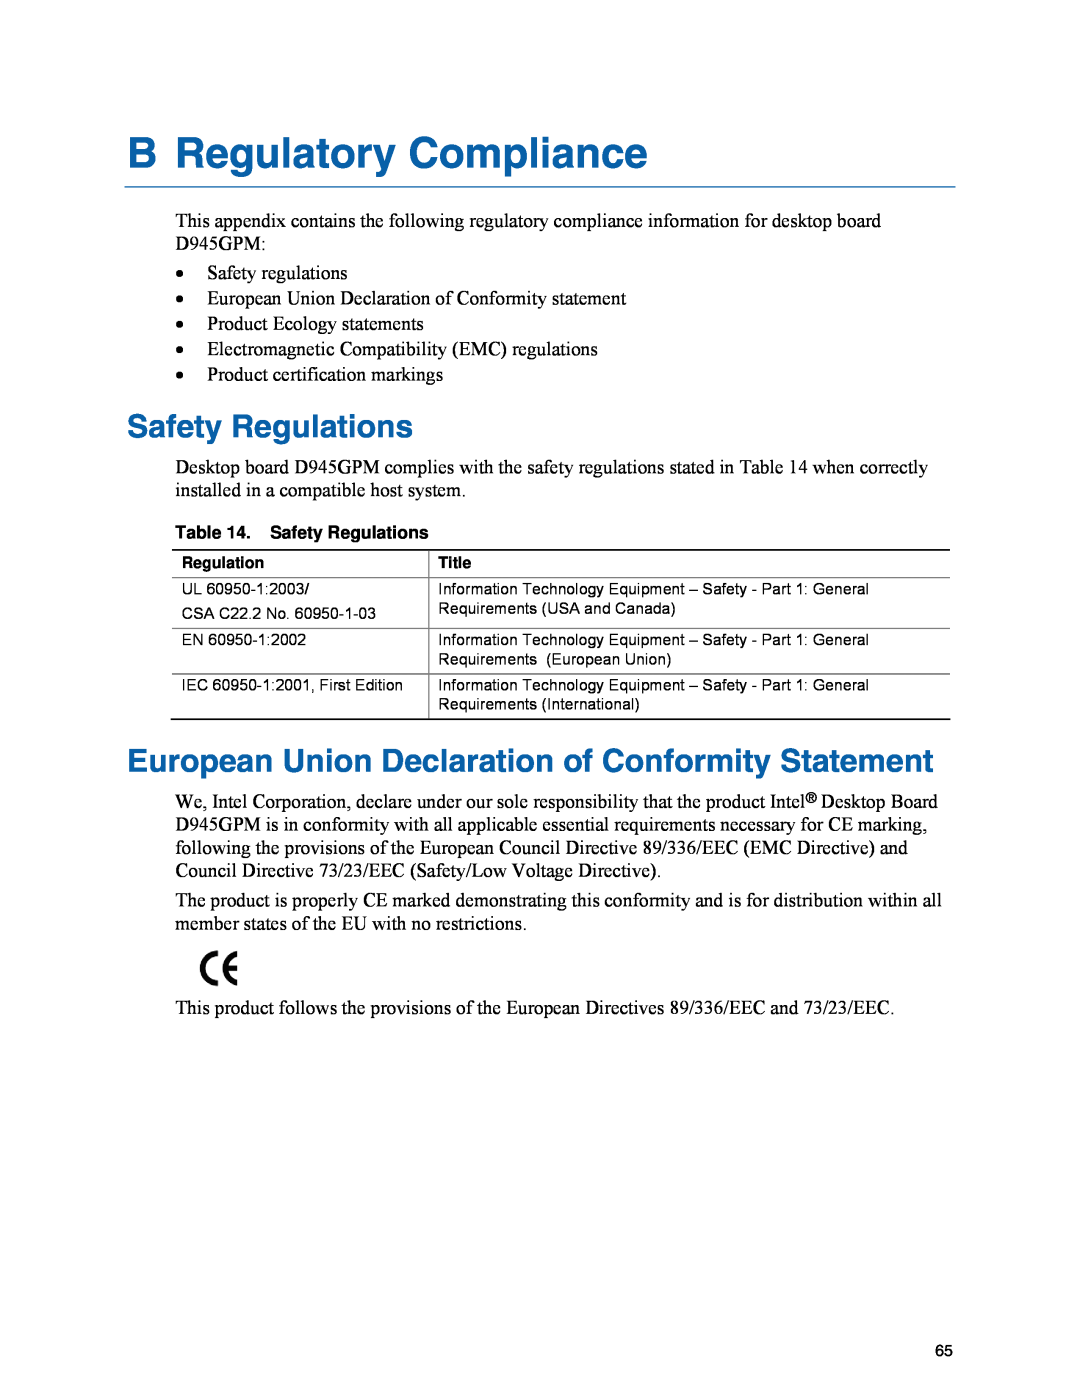 Intel D945GPM manual B Regulatory Compliance, Safety Regulations, European Union Declaration of Conformity Statement 